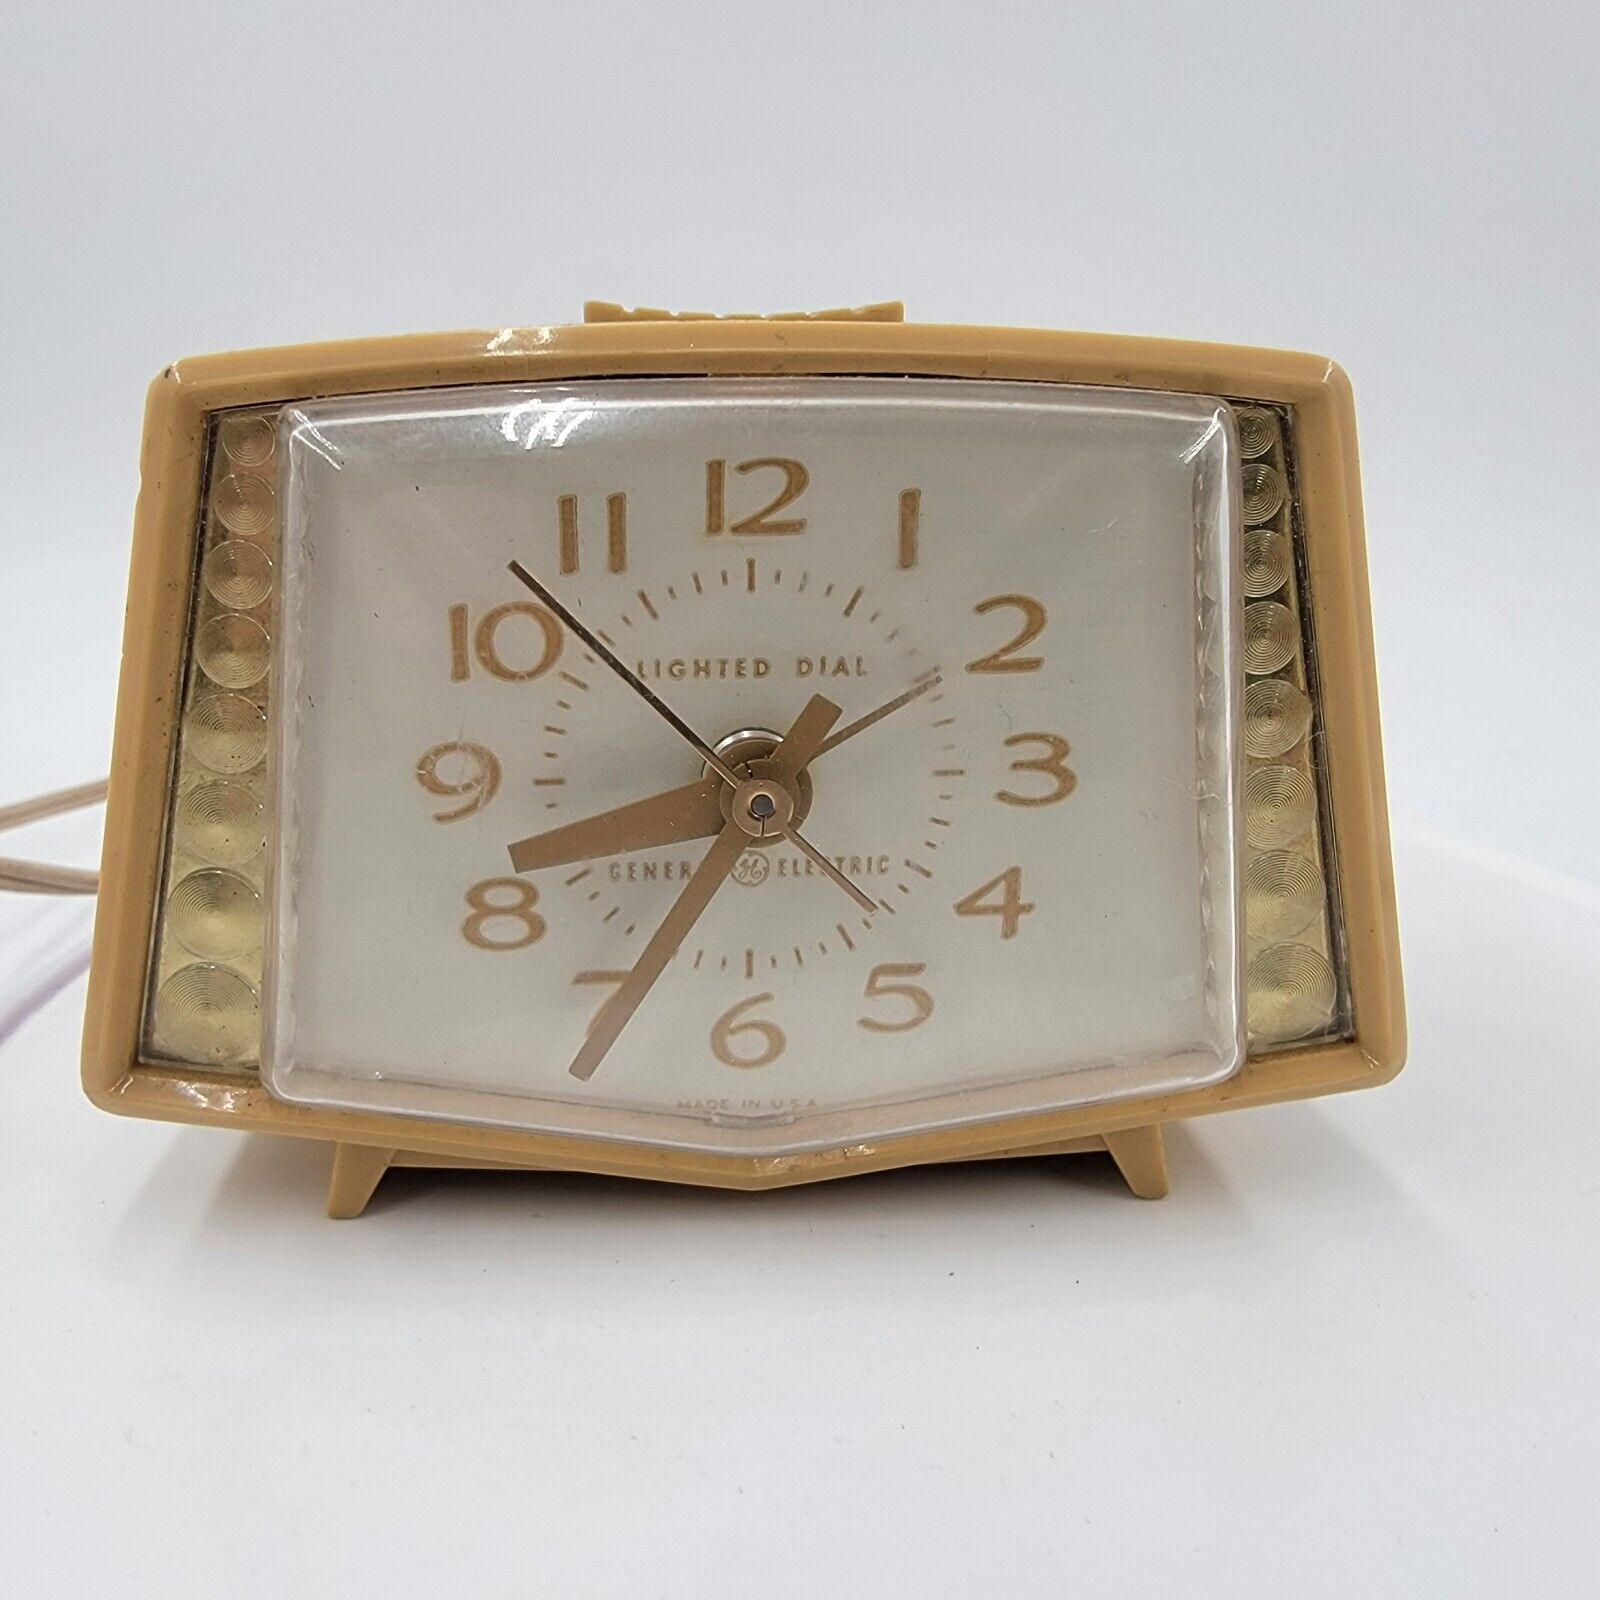 Vintage Working General Electric Lighted Dial Analog Alarm Clock Model 7282 K